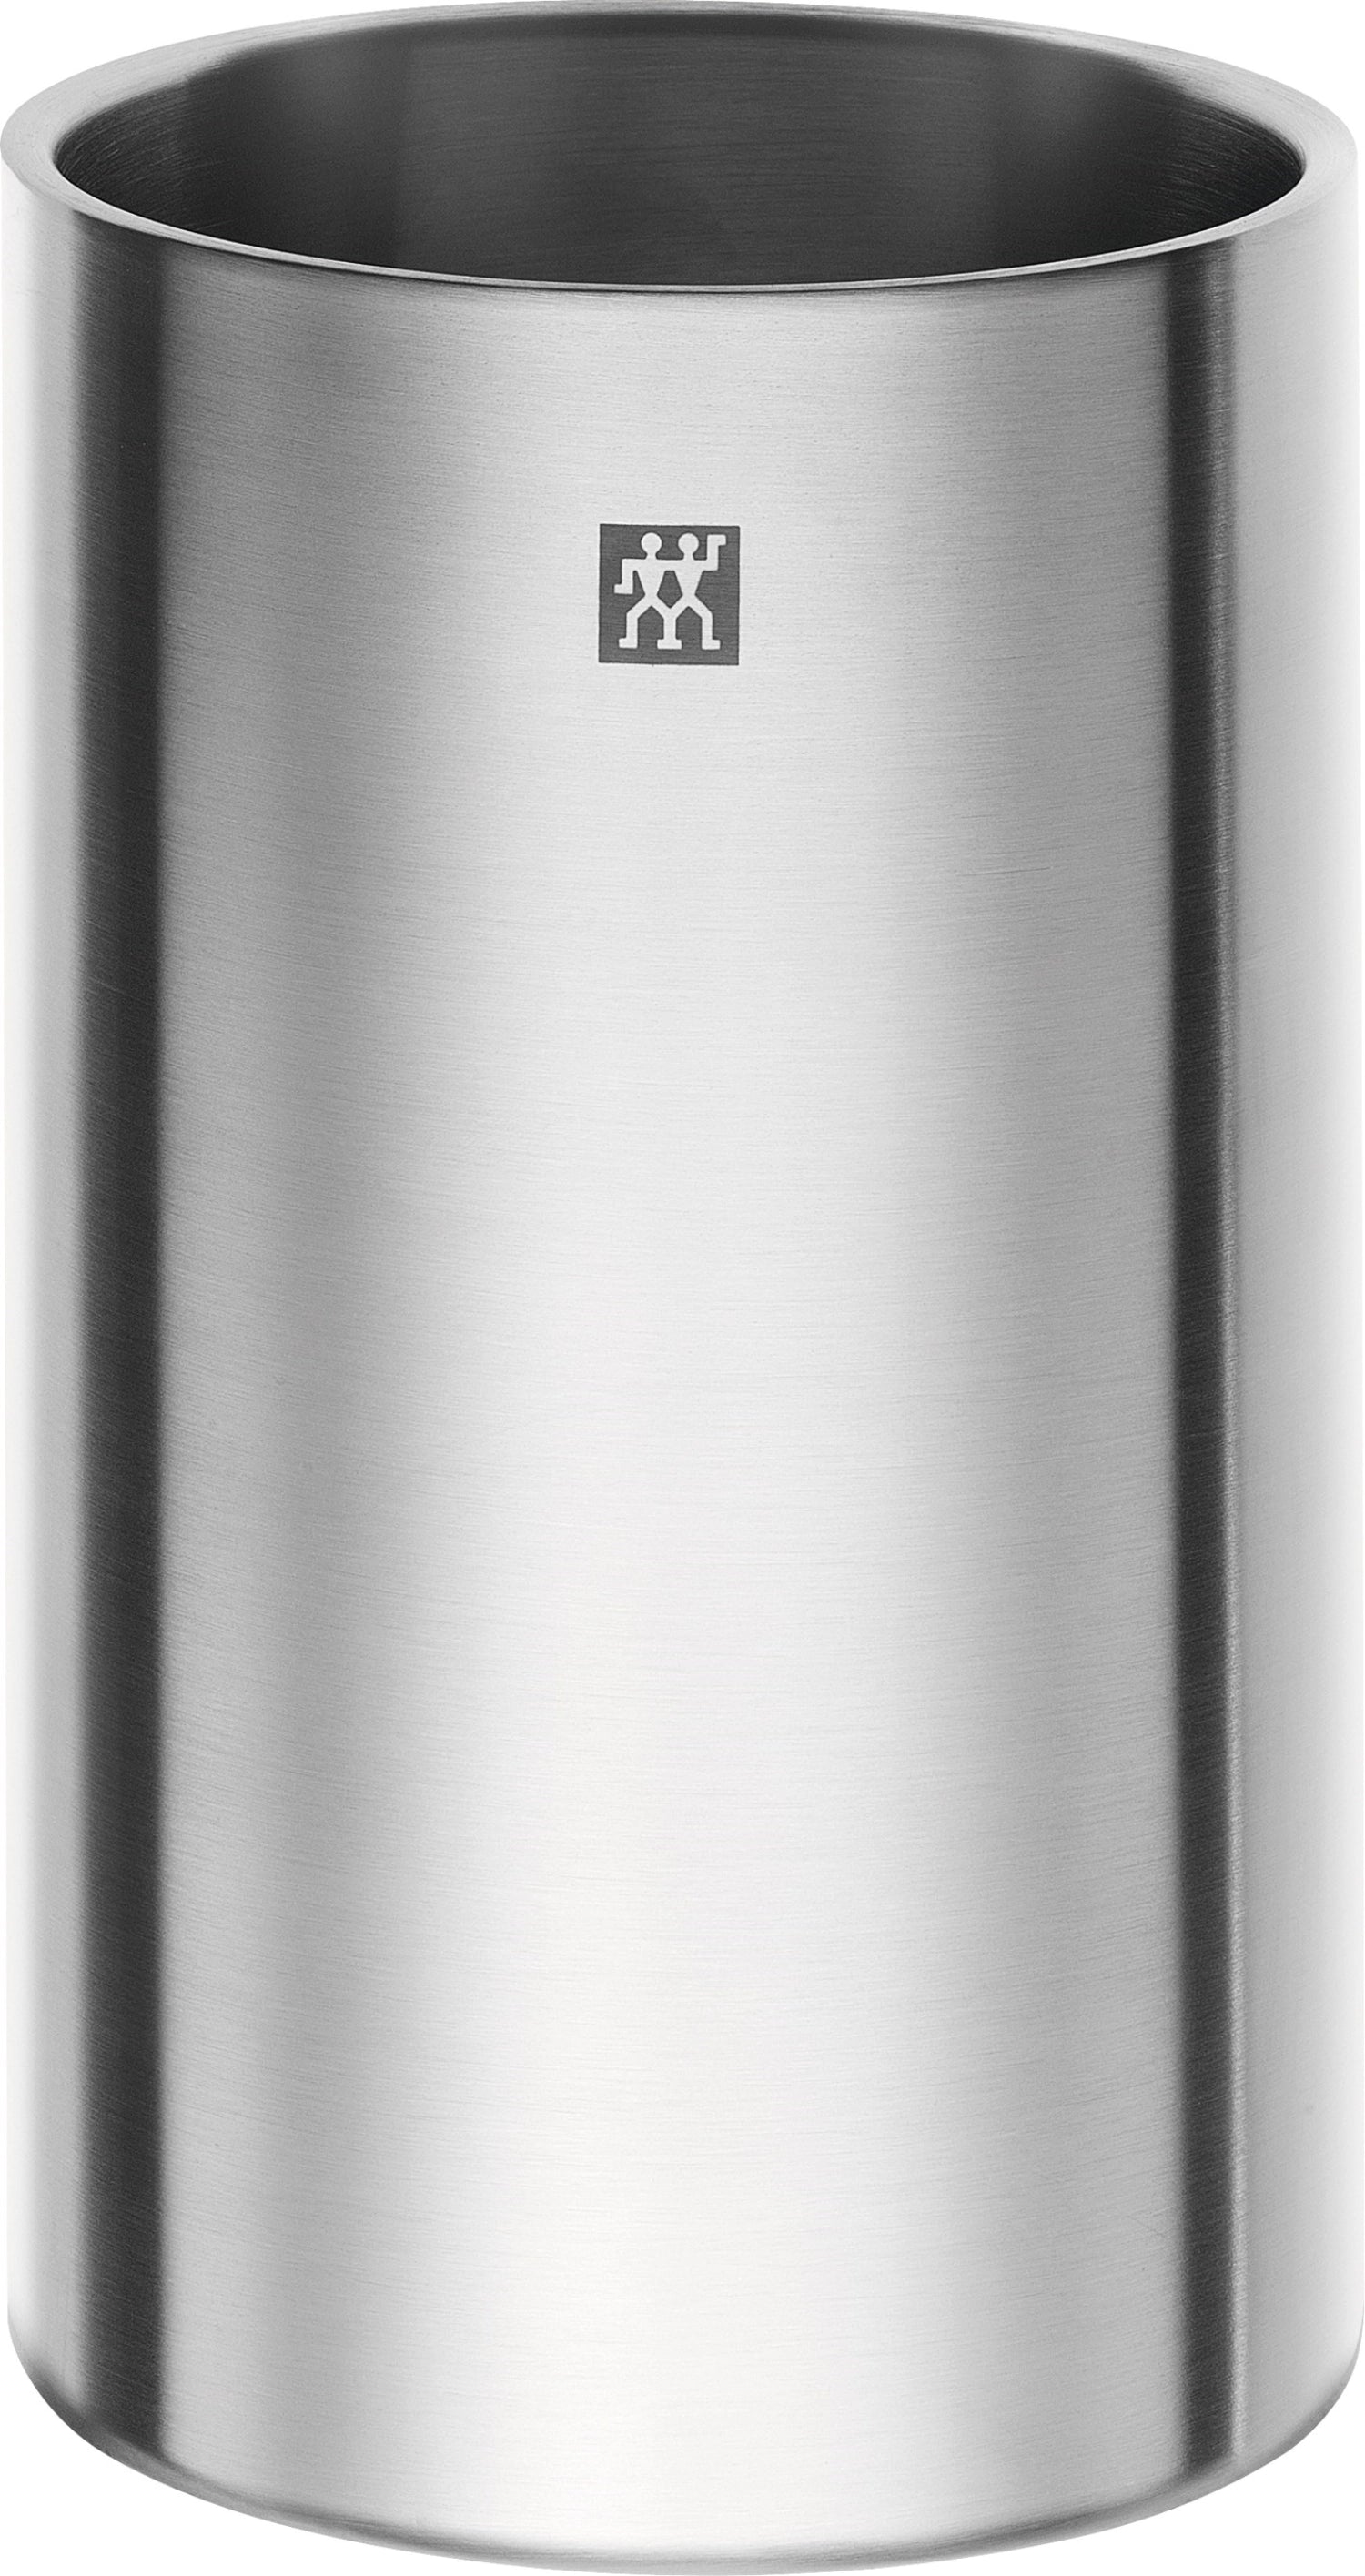 Weinkühler 1.8 lt. - KAQTU Design